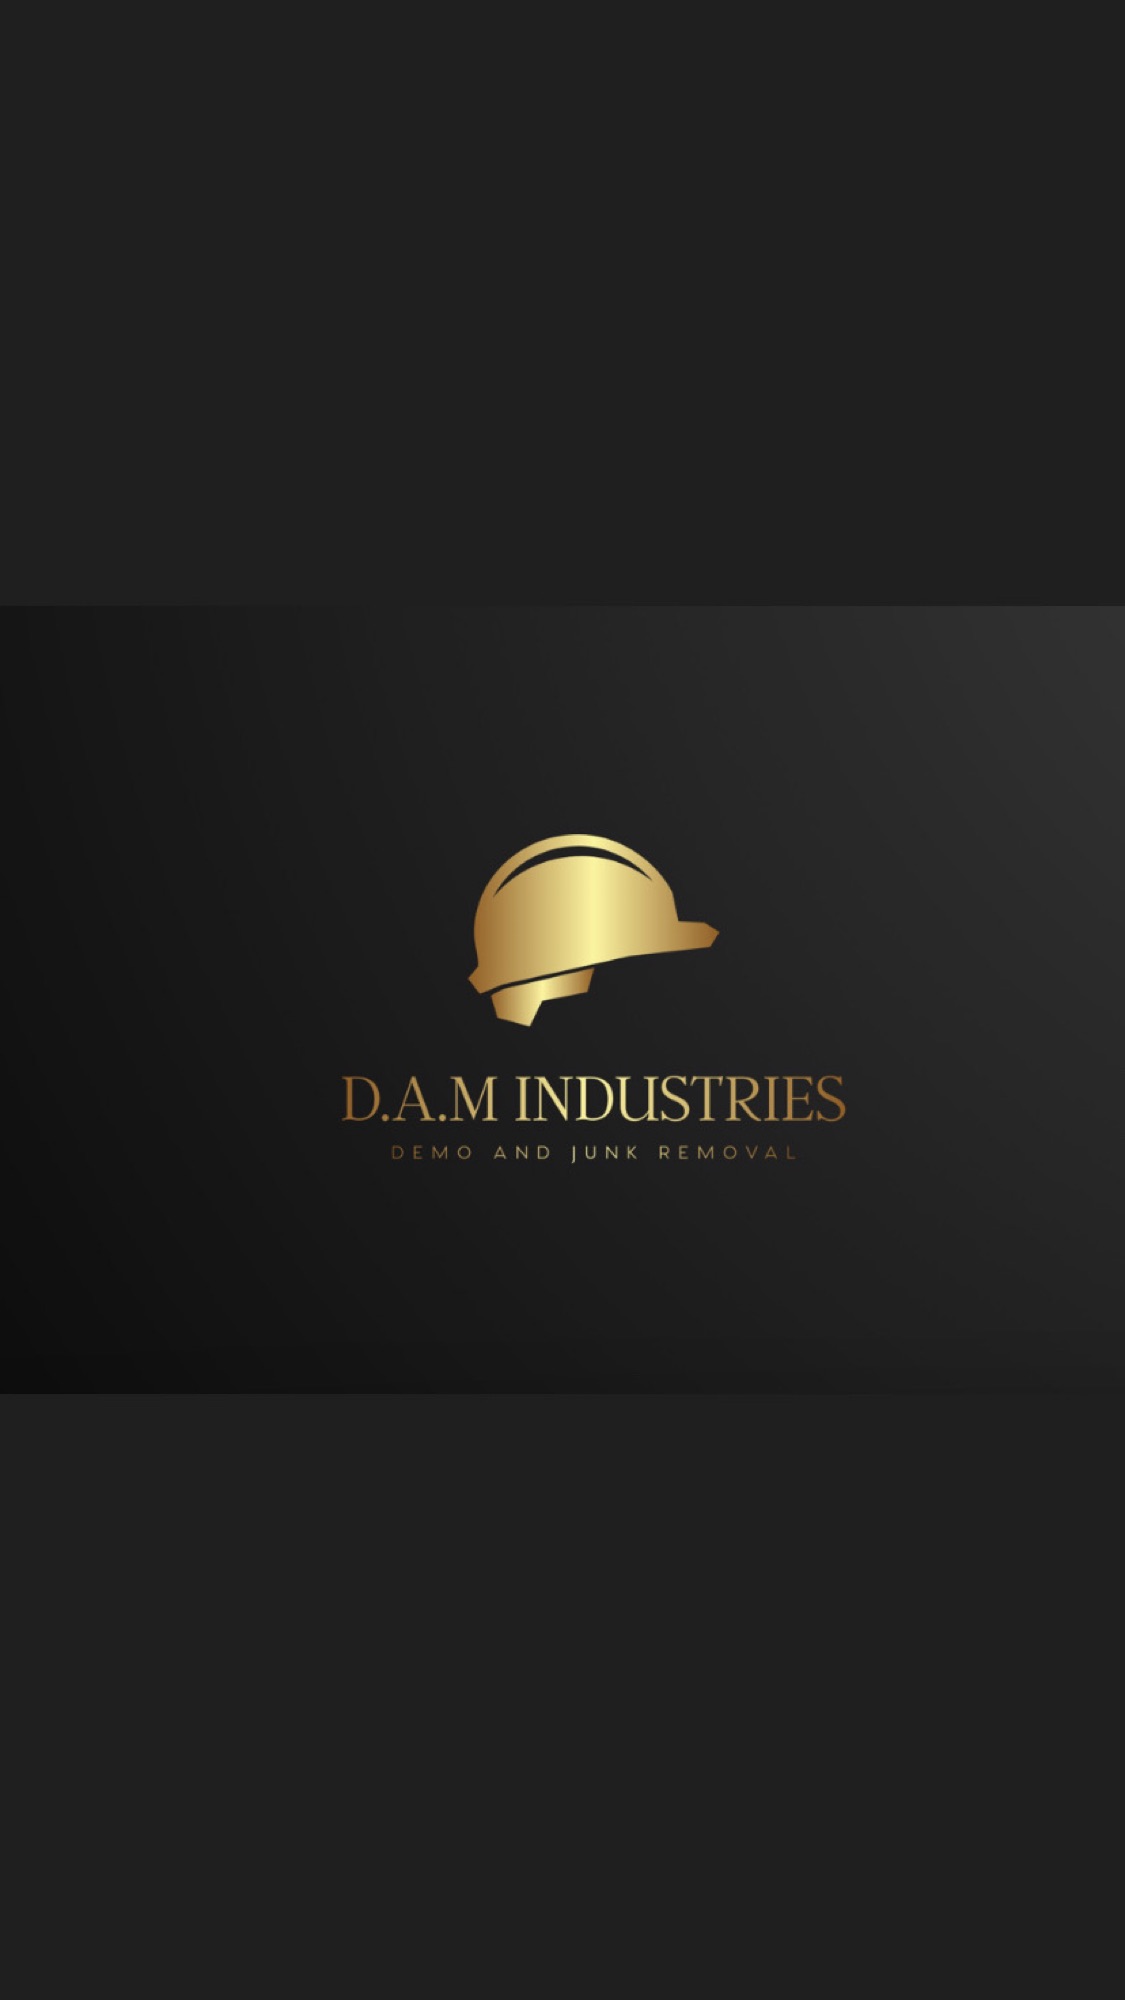 D.A.M.  Industries Logo